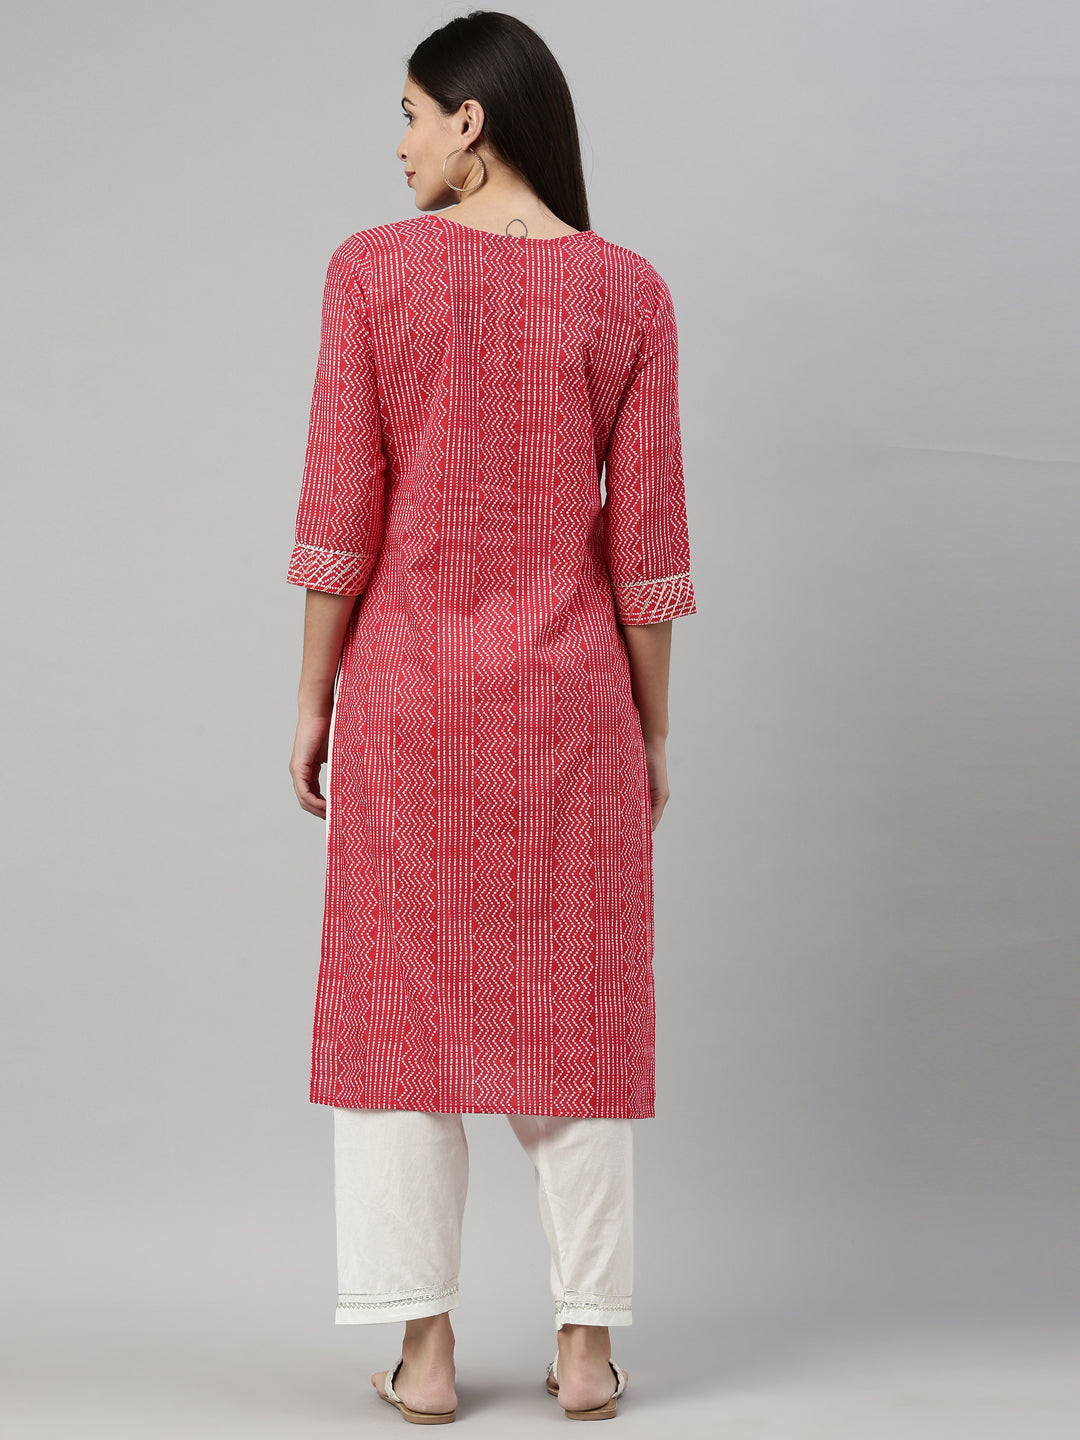 Neeru's Red Color Cotton Fabric Kurta